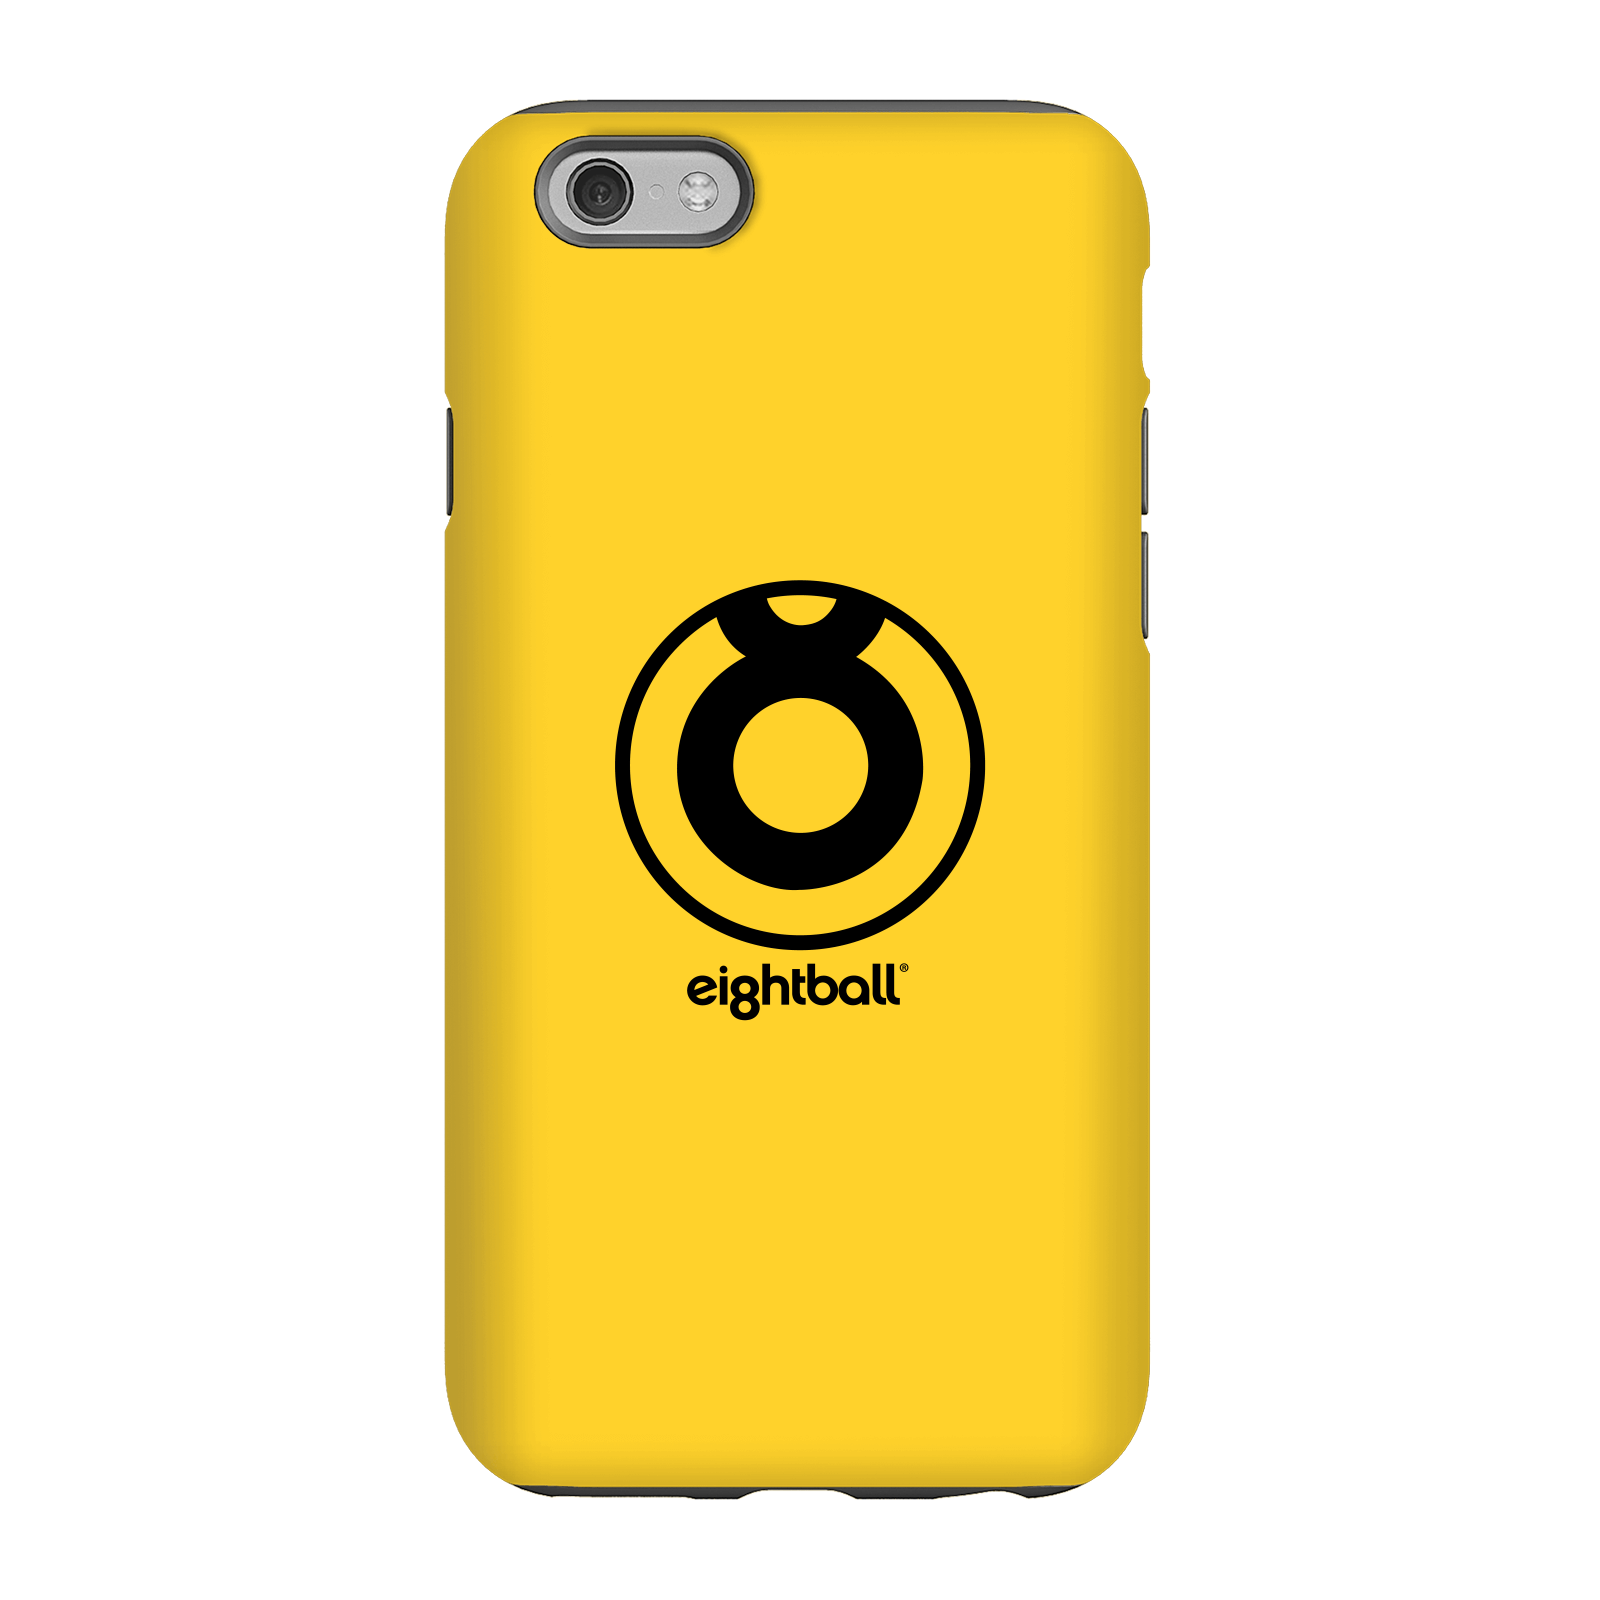 Funda Móvil Ei8htball Large Circle Logo para iPhone y Android - iPhone 6 - Carcasa doble capa - Brillante